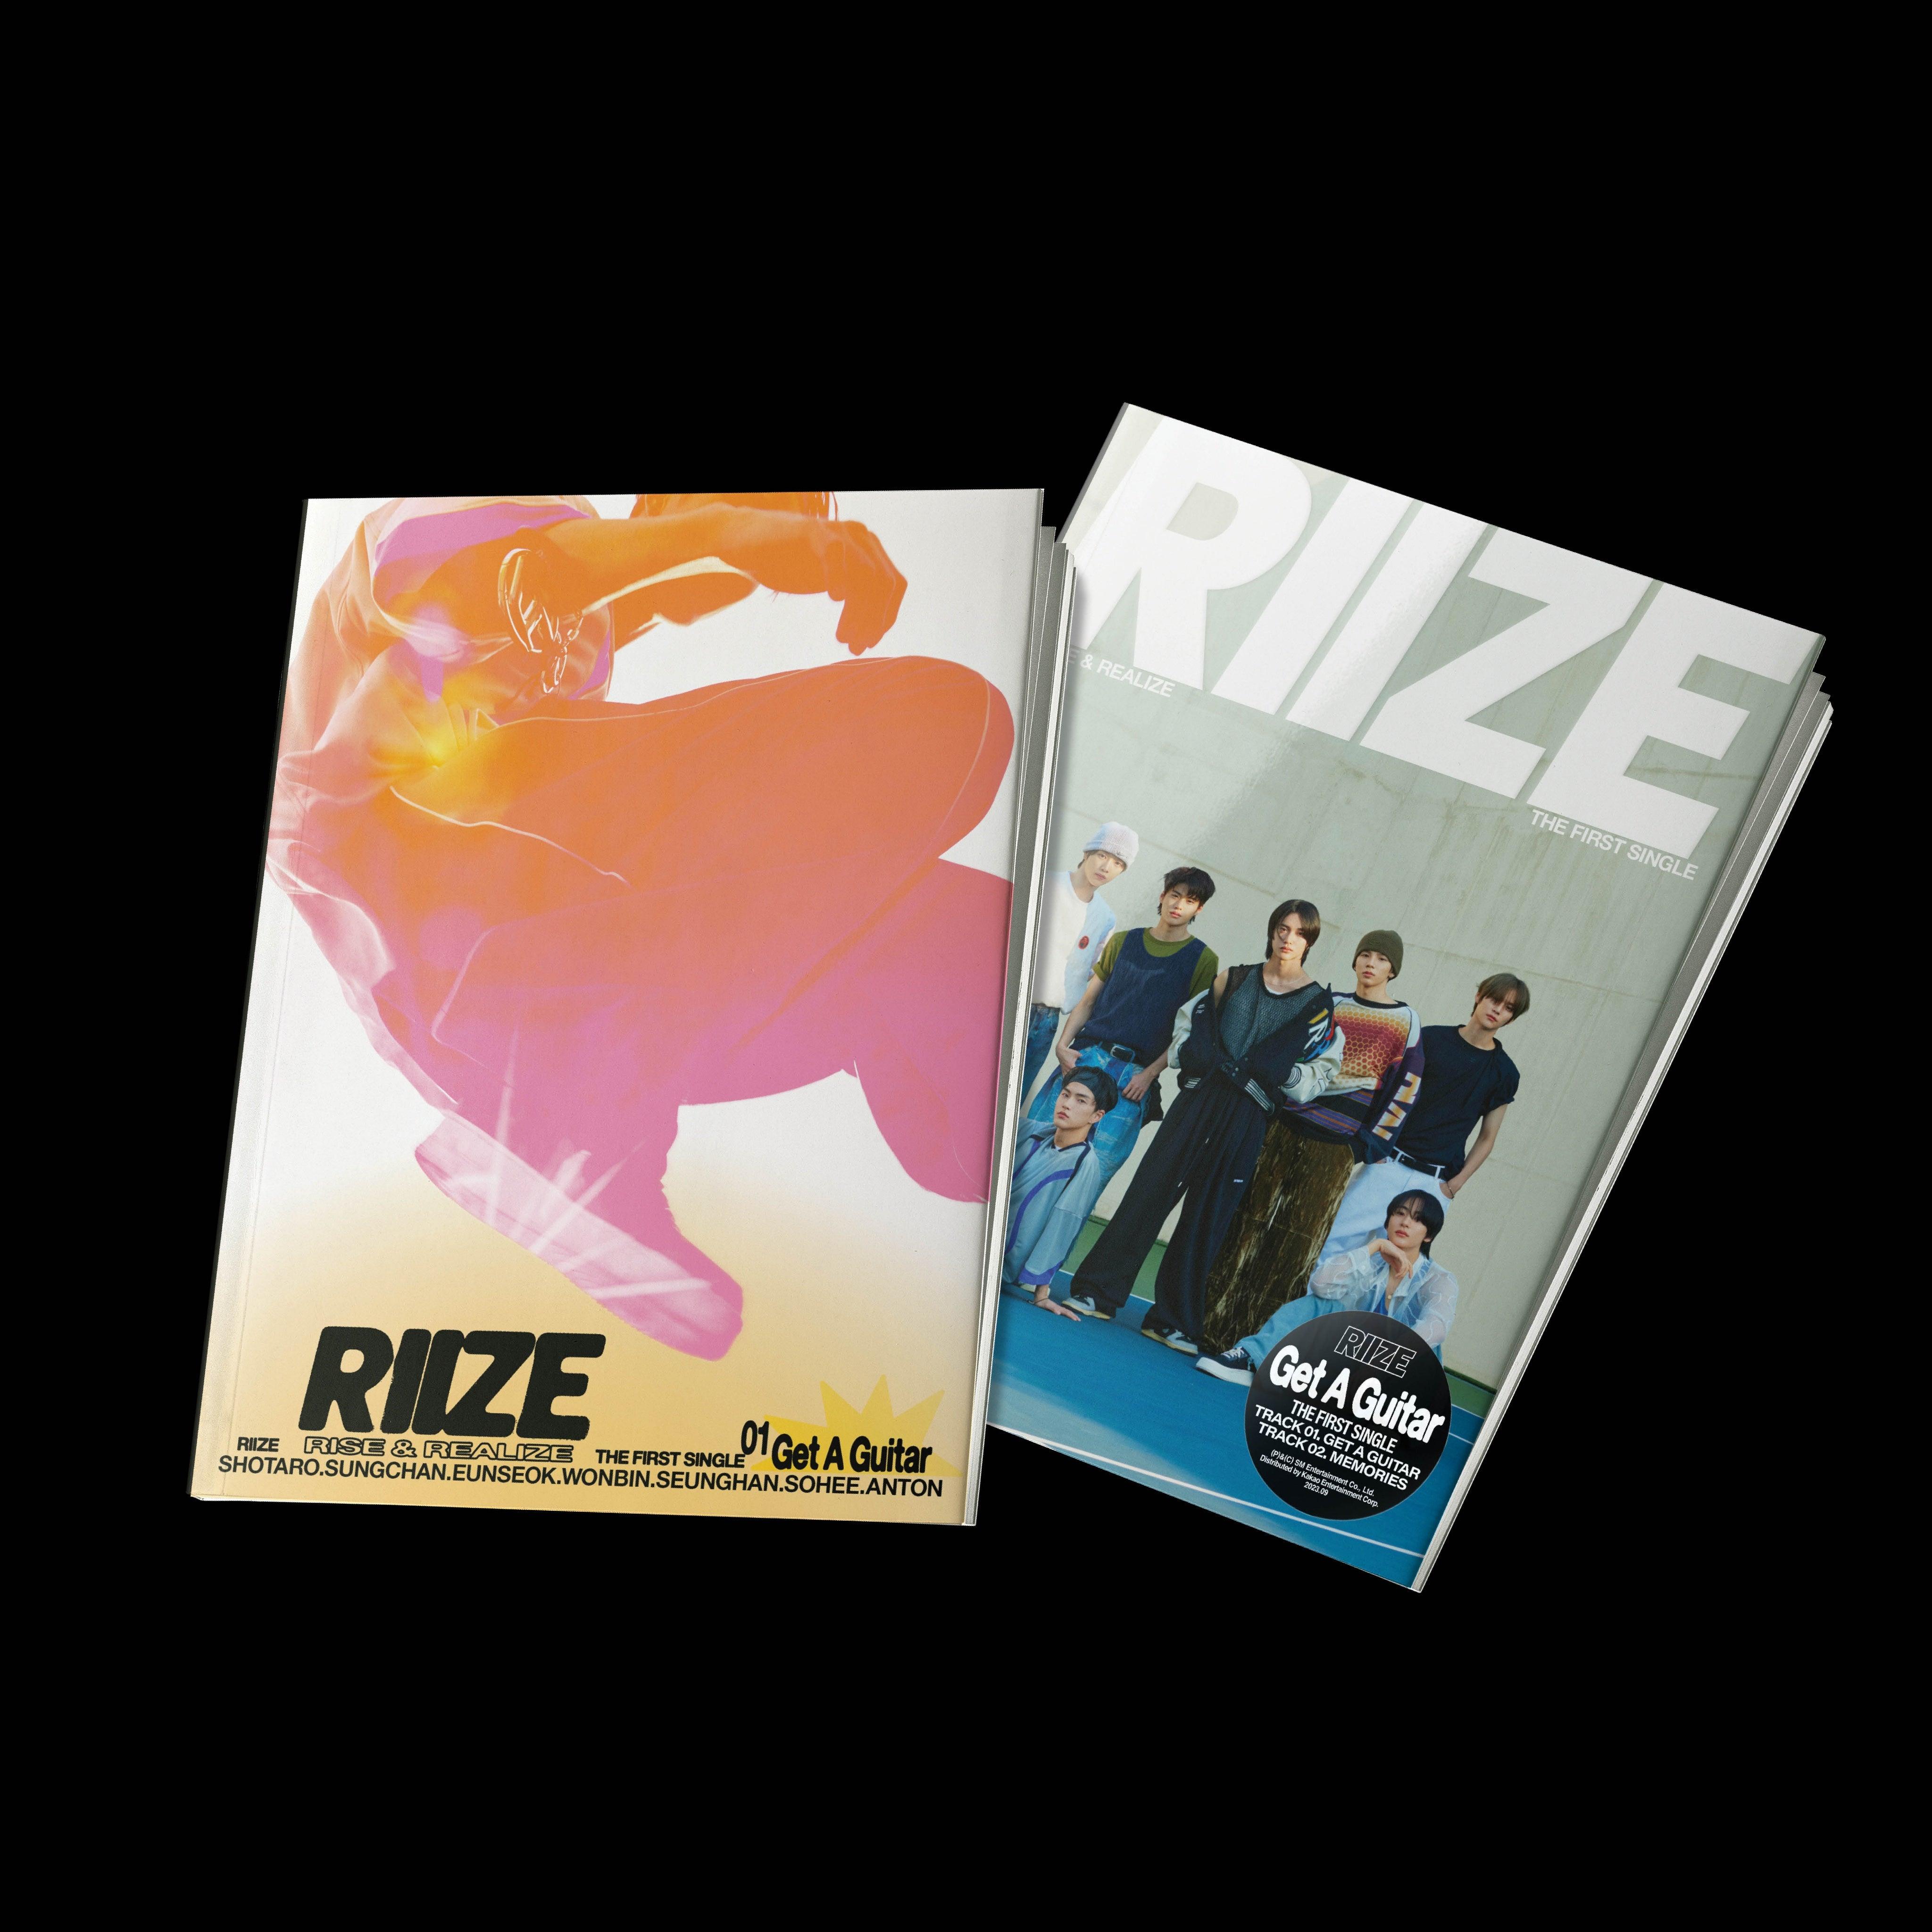 RIIZE Single Album Vol. 1 - Get A Guitar (Random) + Yes24 Showcase Selfie Photocard - KKANG